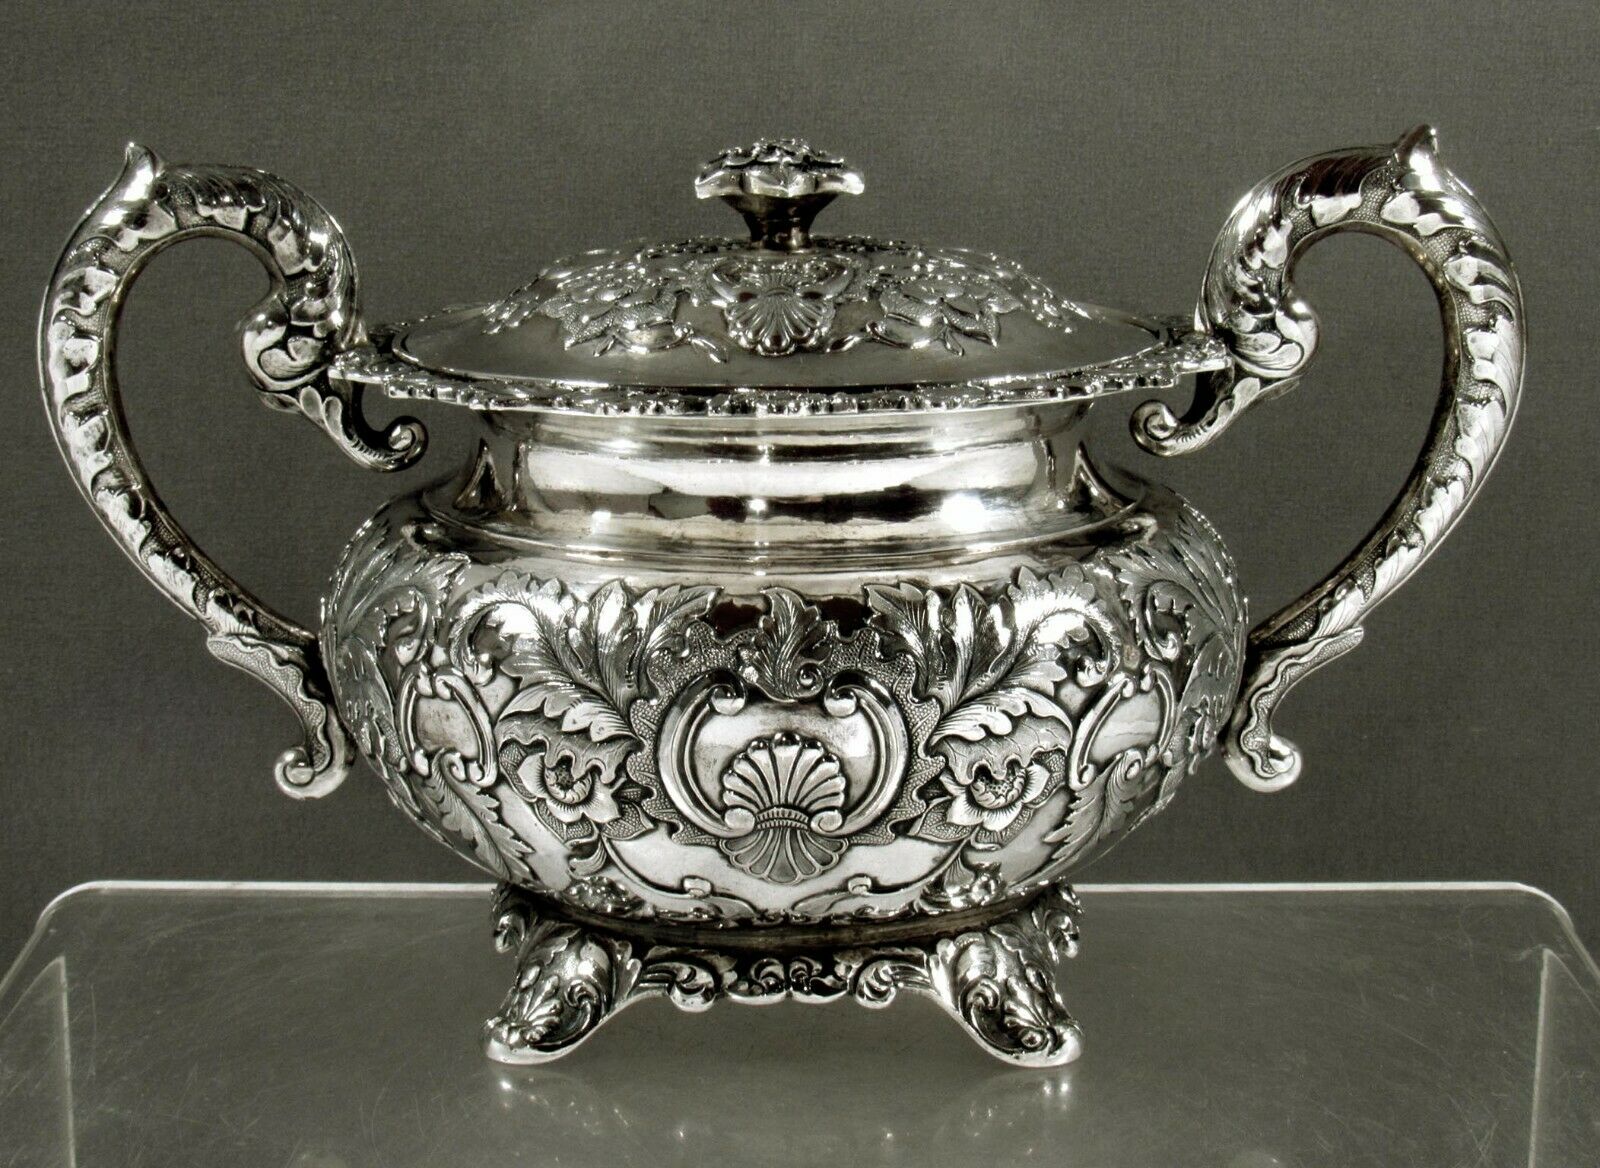 Chinese Export Silver Sugar Bowl     c1840 CAPT. PEELE